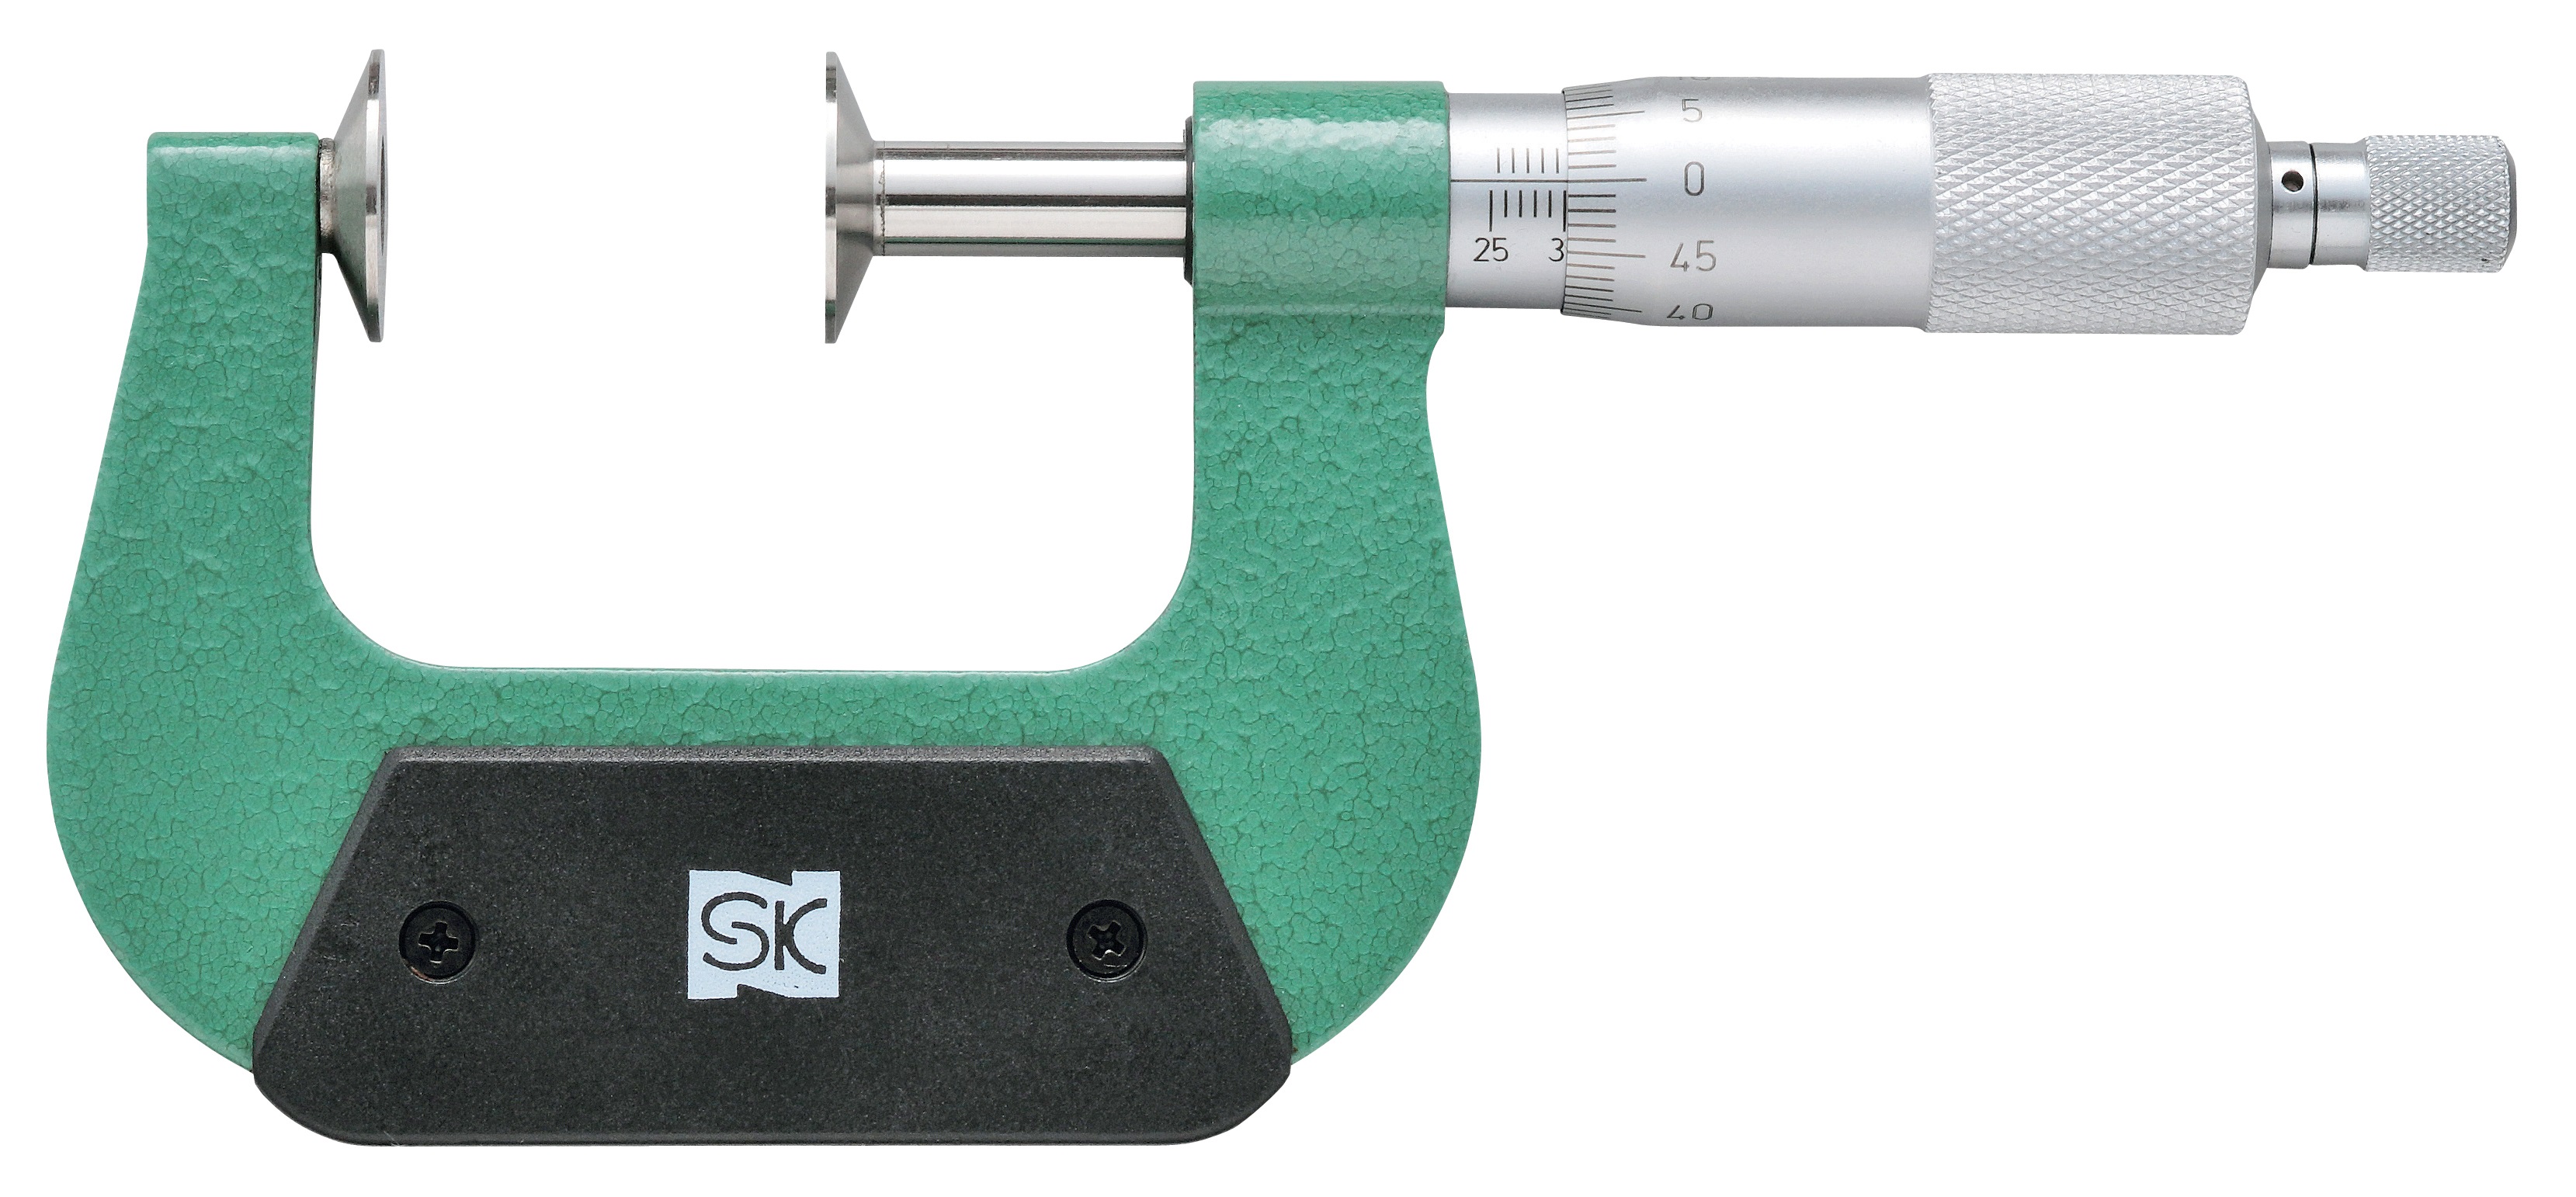 IP65防水 新潟精機 SK 直進式歯厚マイクロメーター 測定範囲0〜25mm